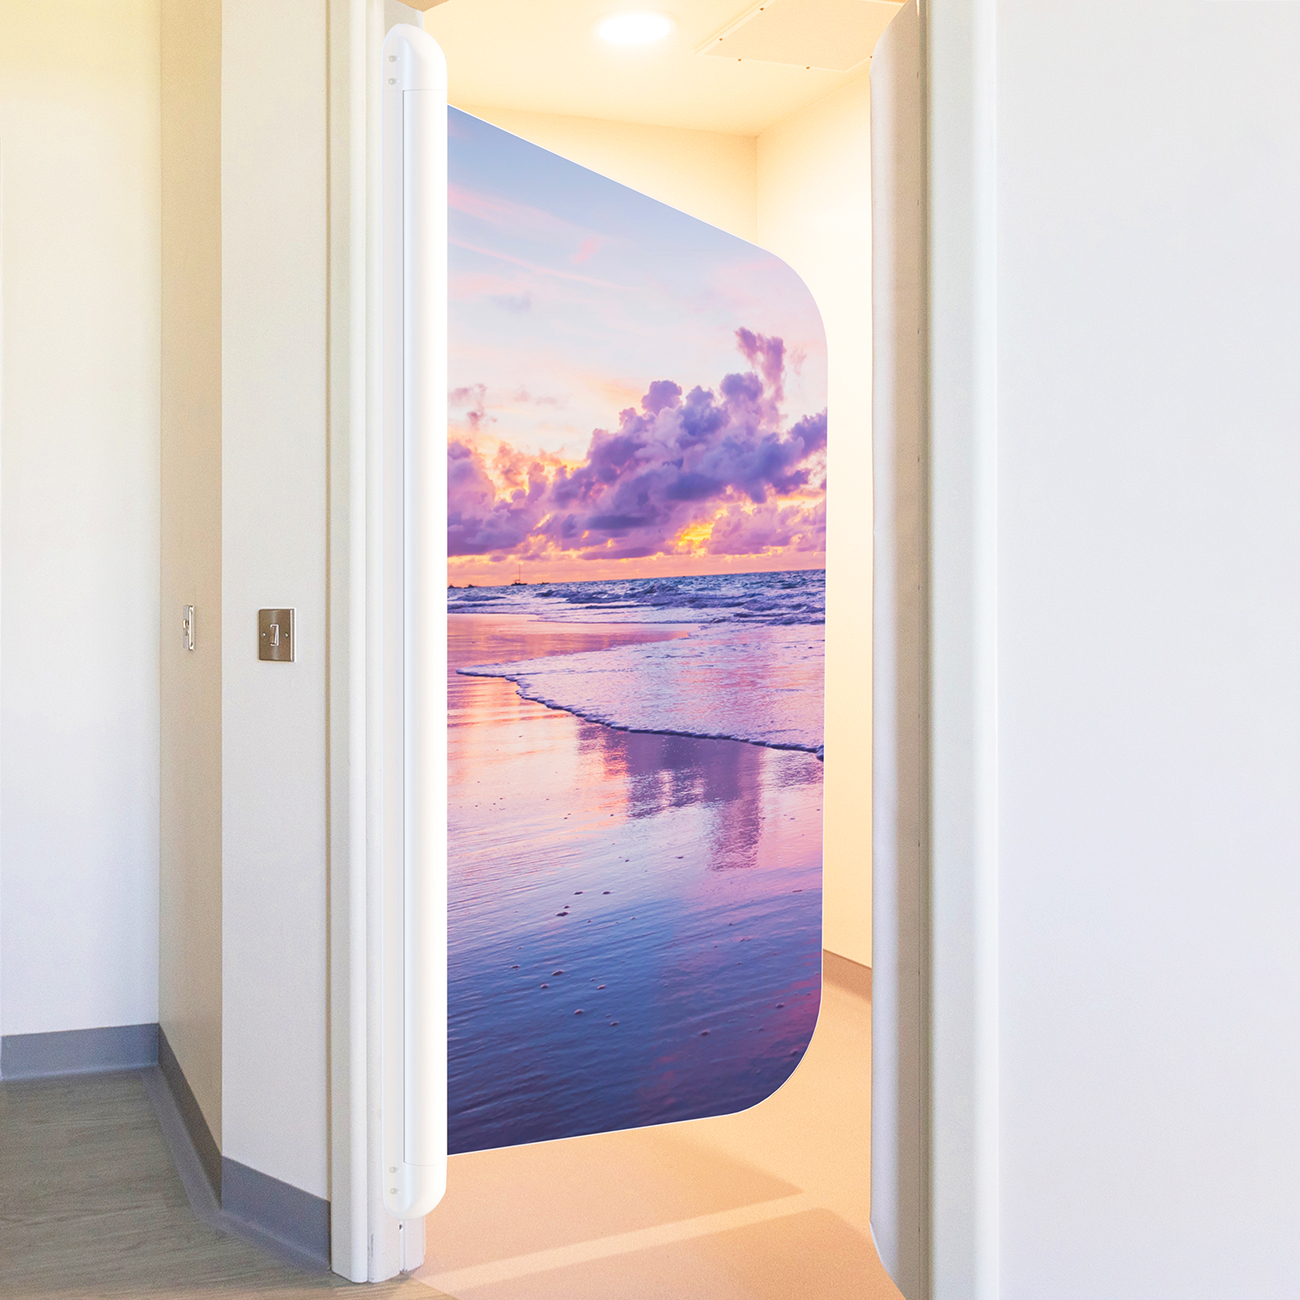 Kingsway Group's ligature resistant SHOWER Door System for behavioral health facilities.